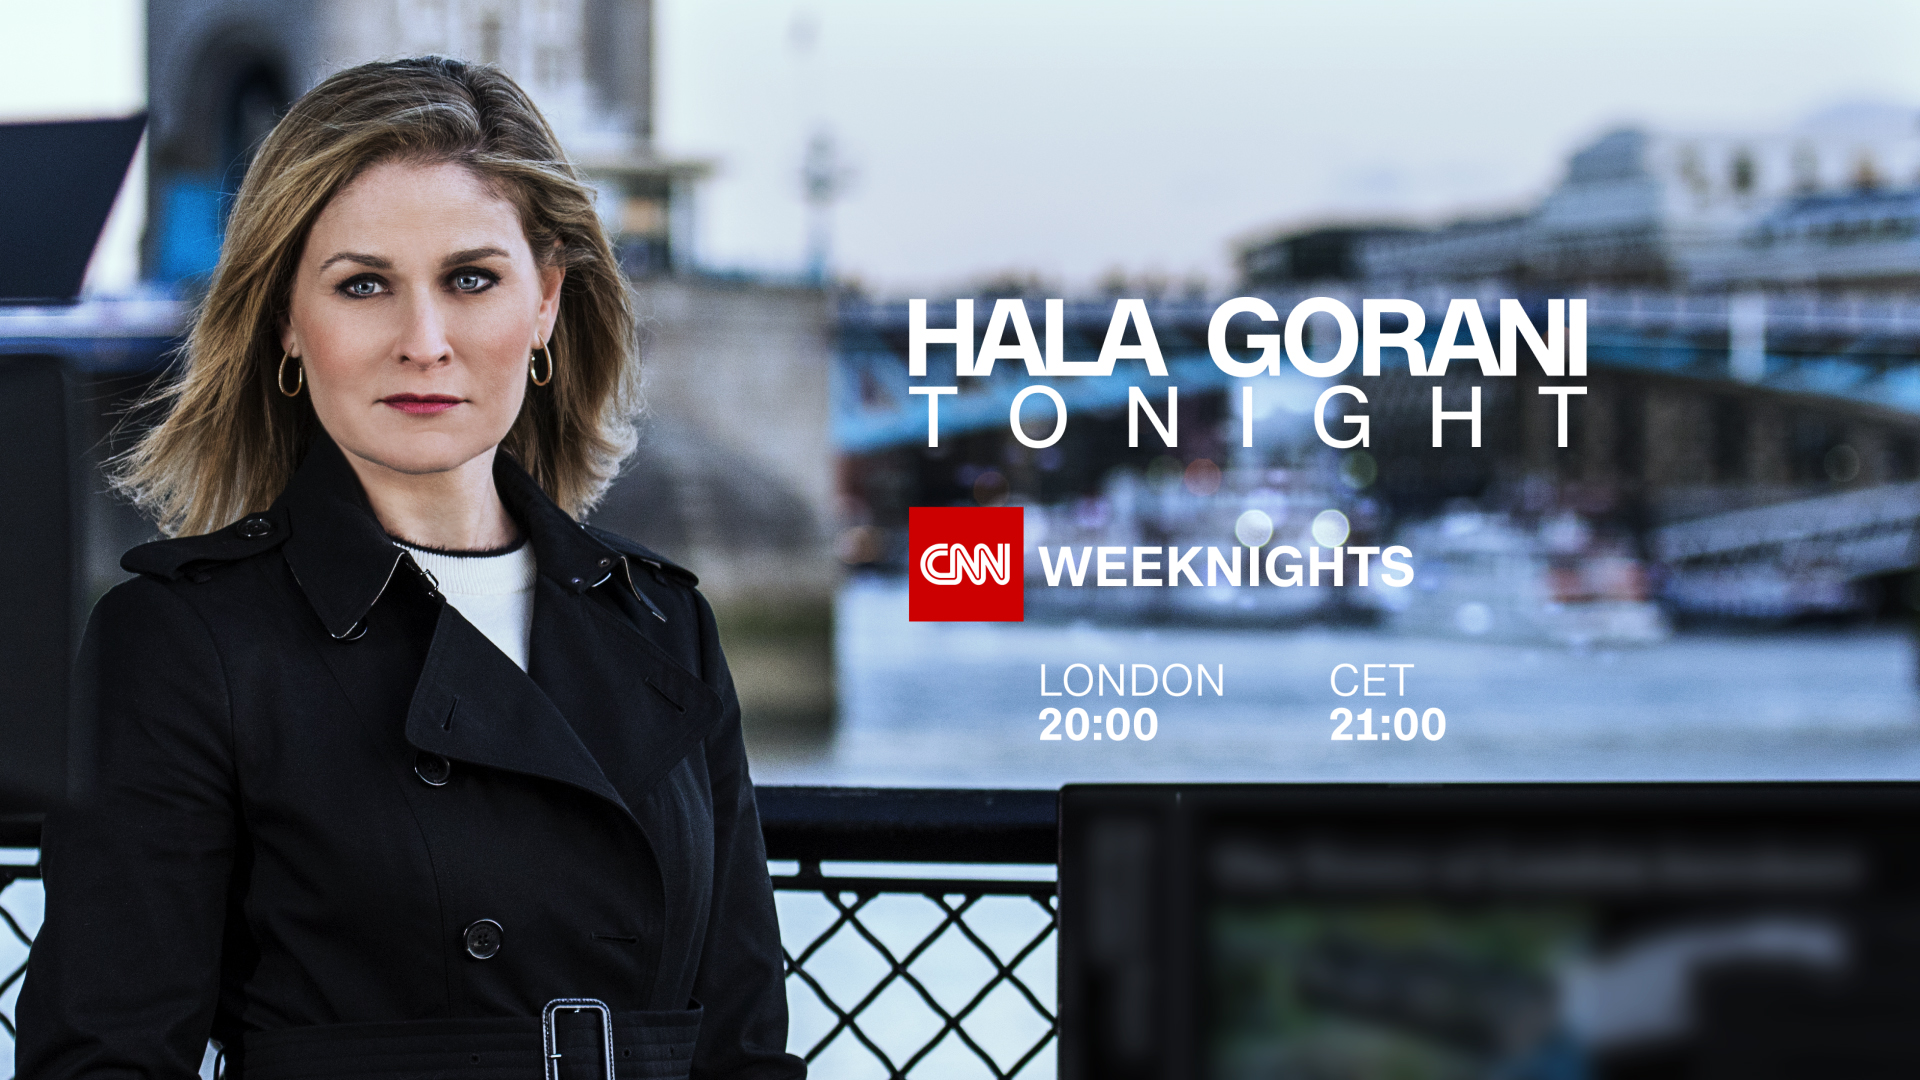 Hala Gorani Tonight to debut tomorrow – CNN Commentary1920 x 1080